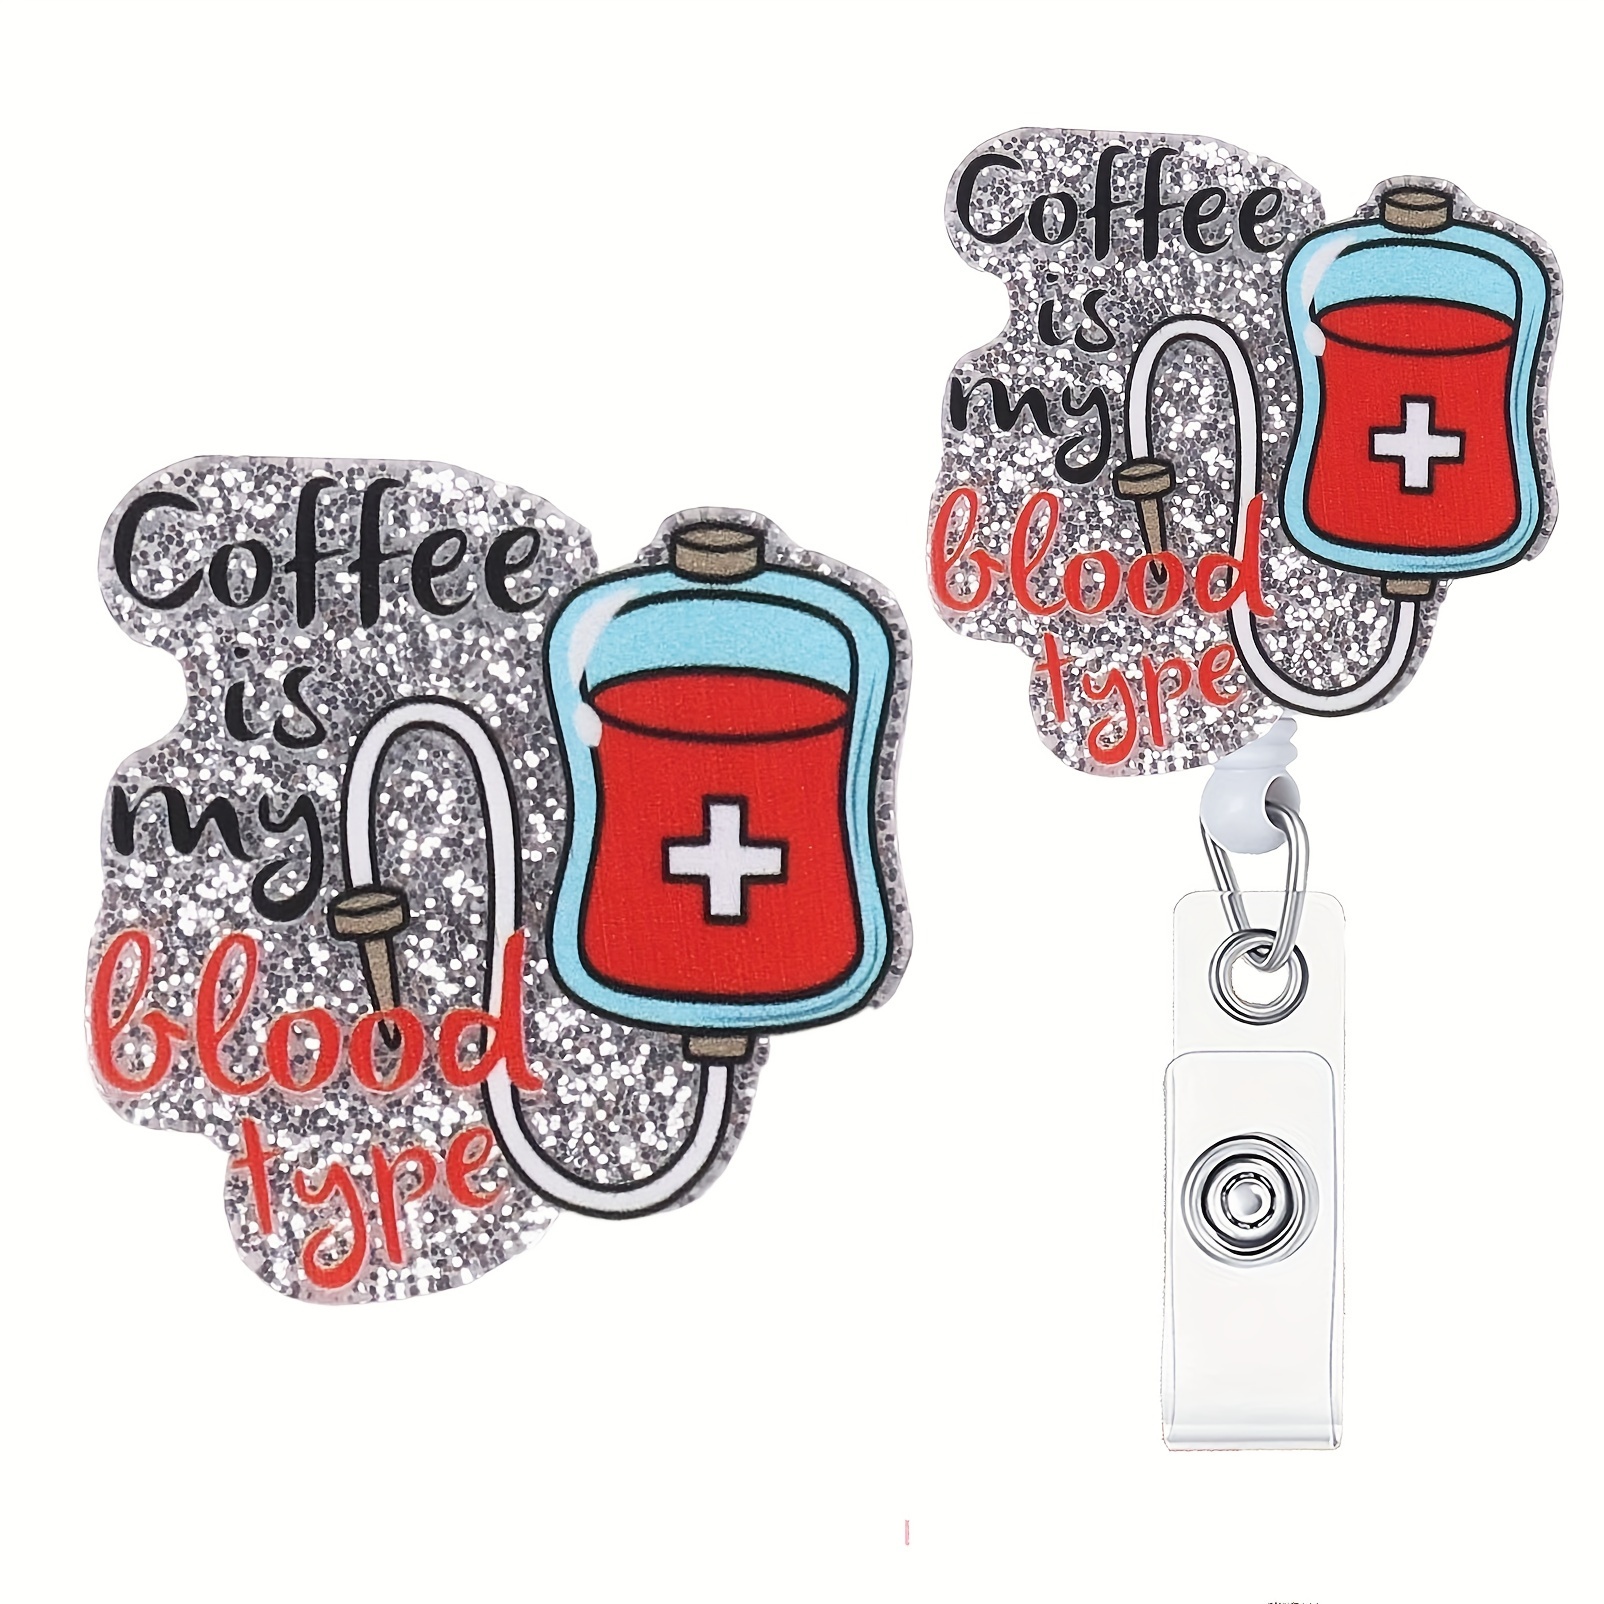 Coffee Blood Type Nurse Badge Reel Medical Work Office - Temu United Kingdom